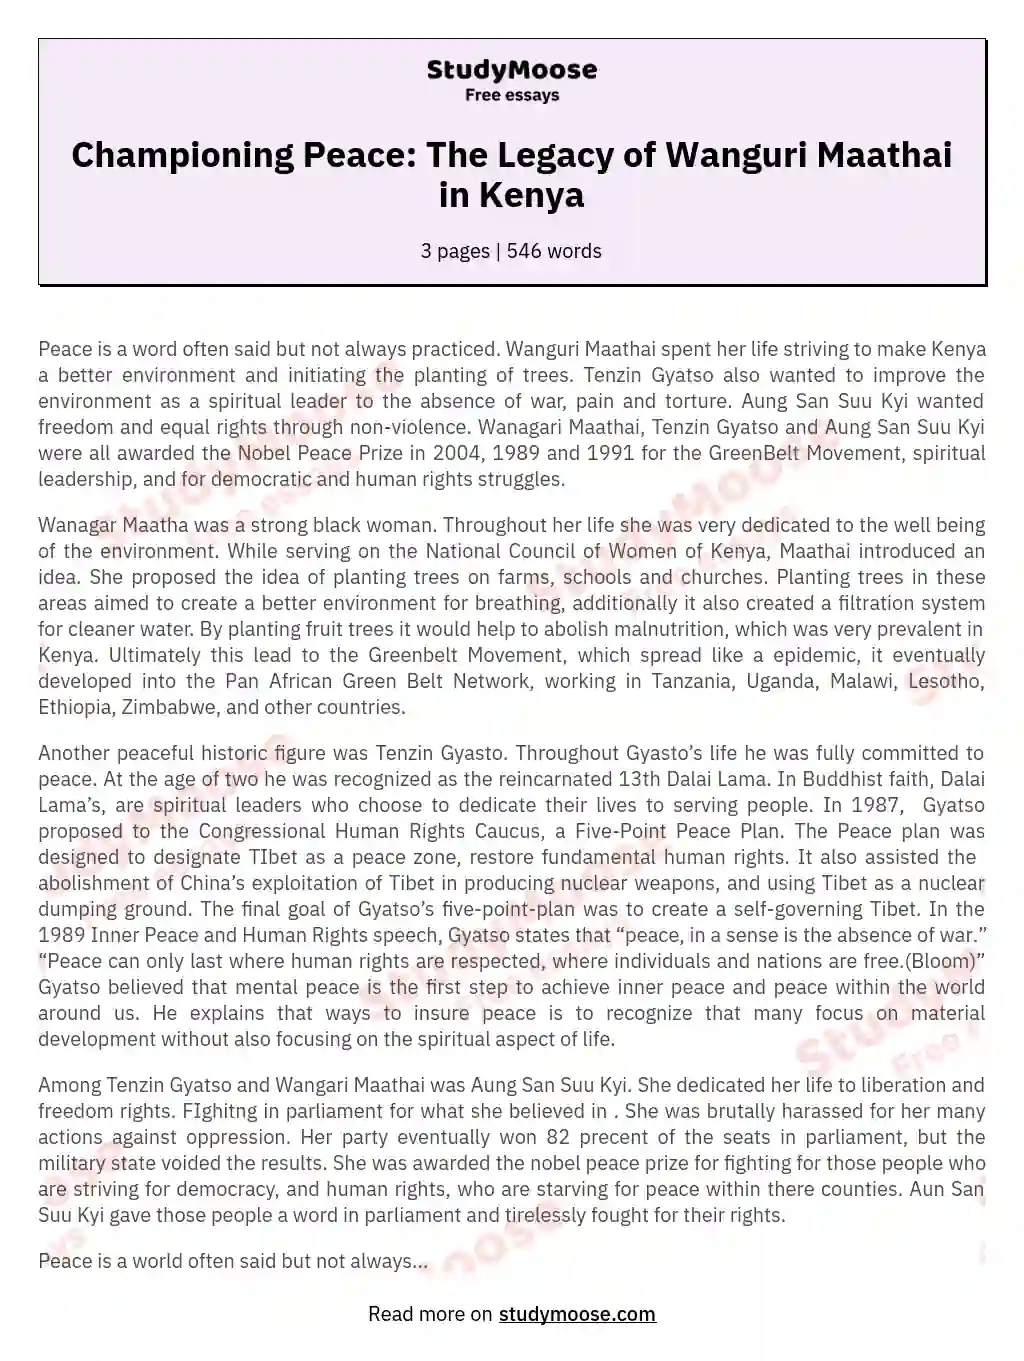 Championing Peace: The Legacy of Wanguri Maathai in Kenya essay